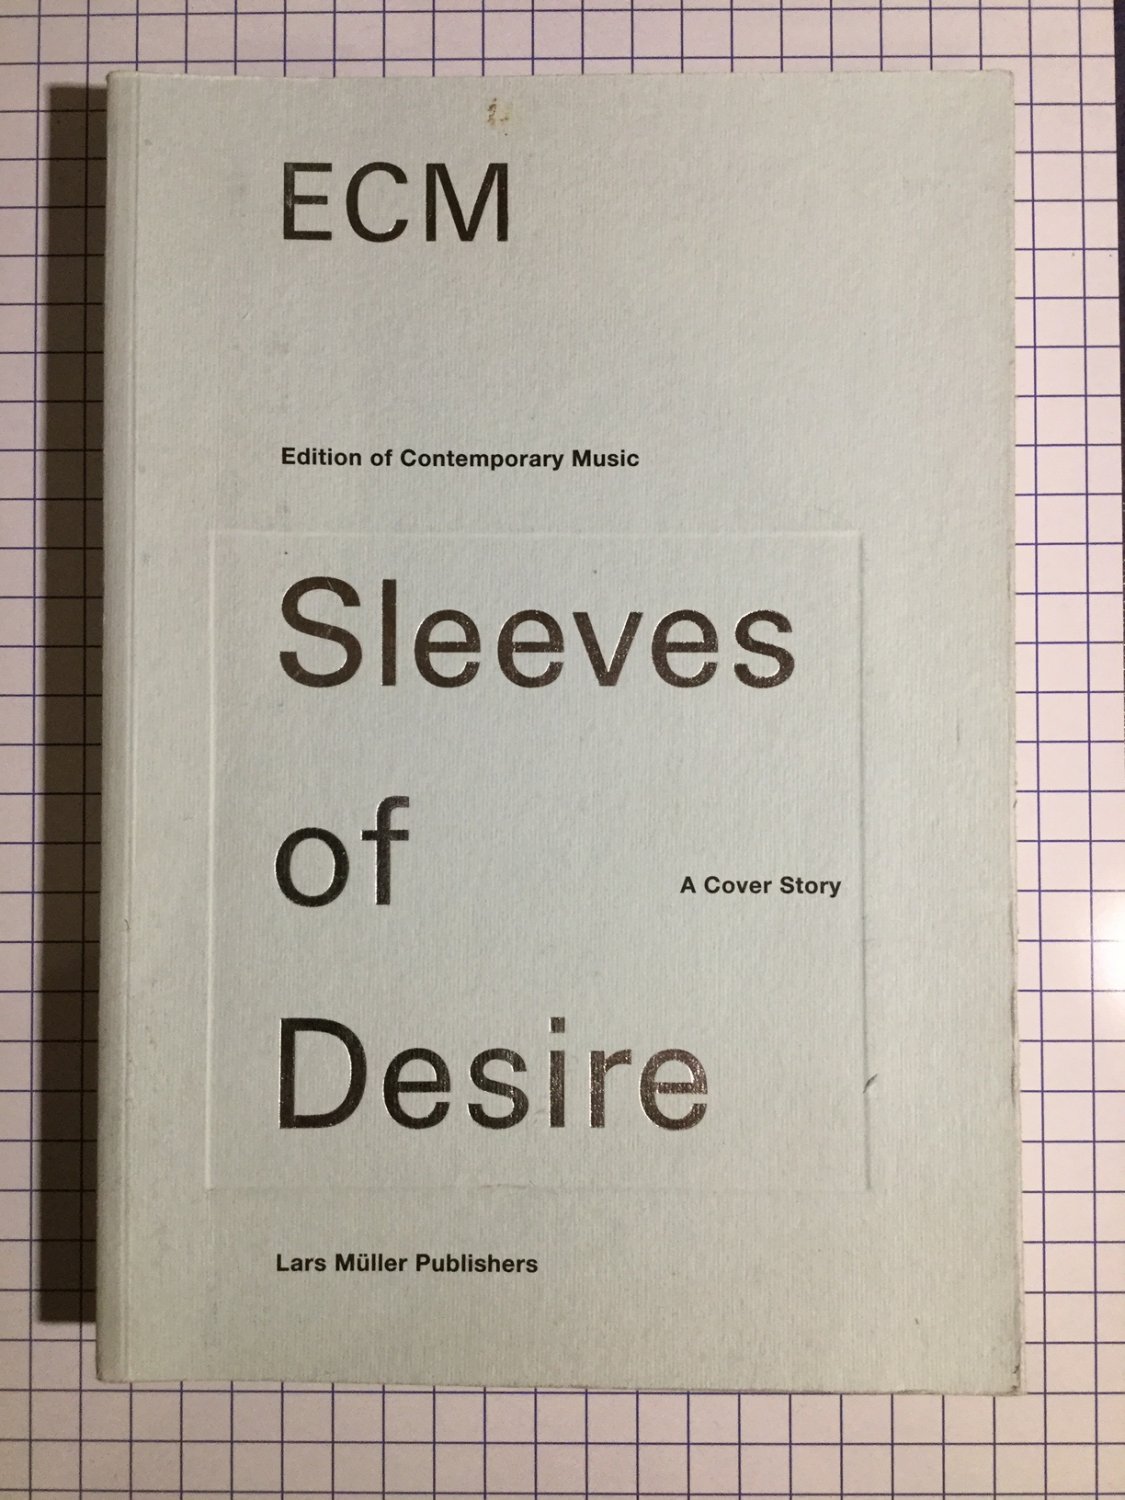 ECM - Sleeves of Desire.“ (Manfred Eicher, Lars Müller) – Buch 